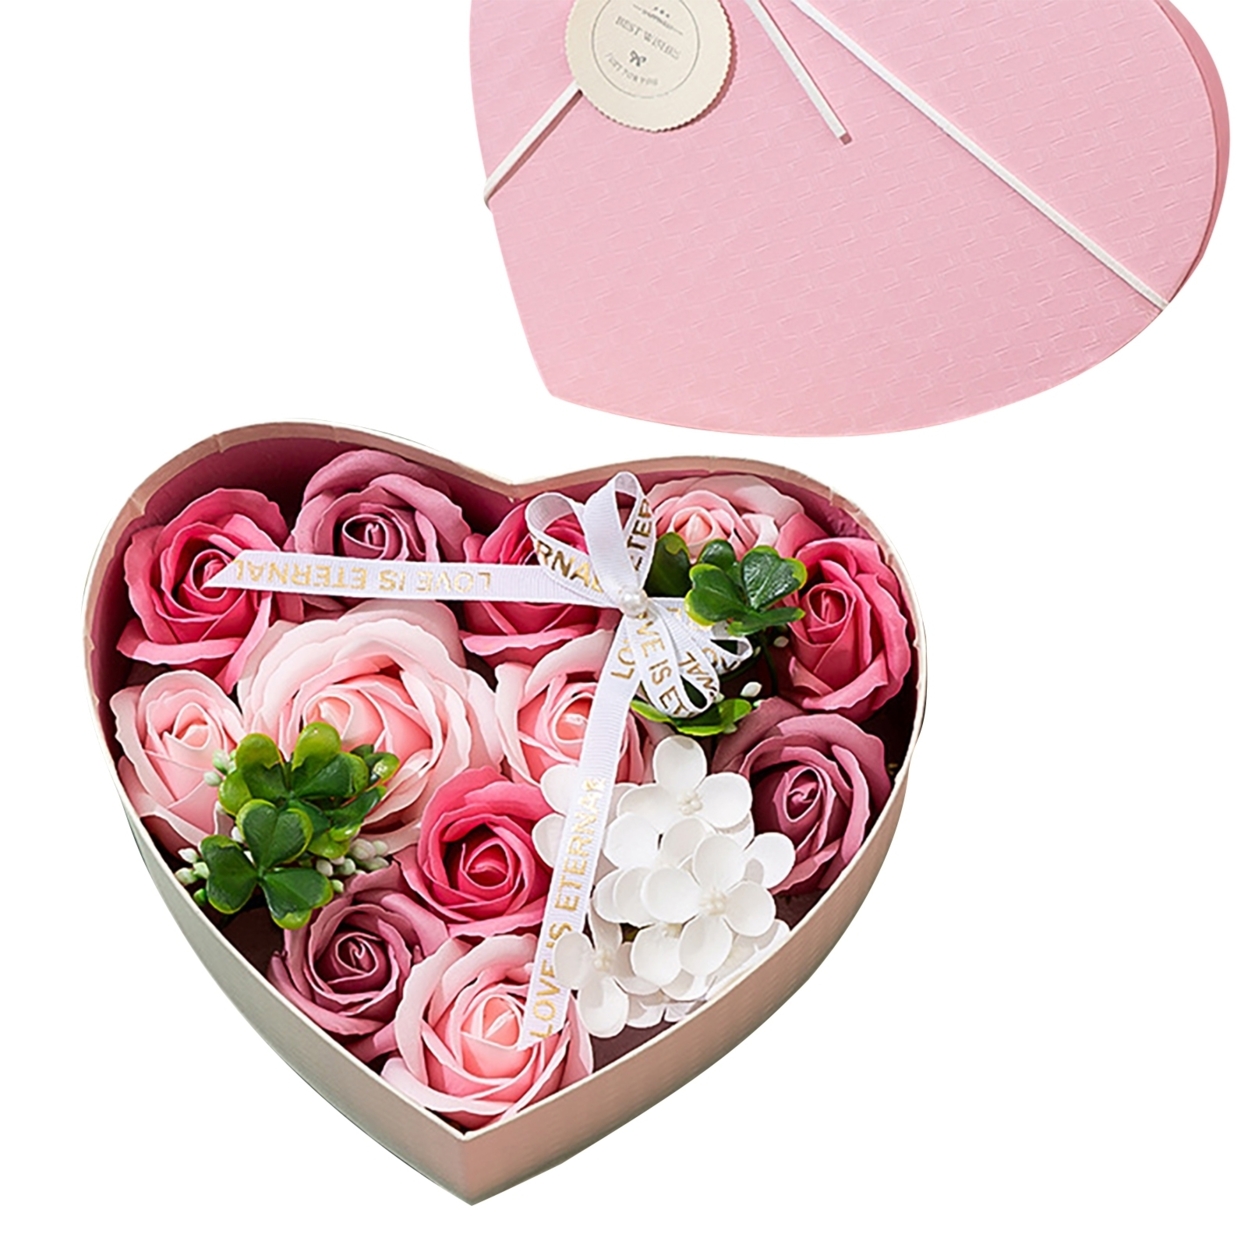 1 Box Exquisite Artificial Soap Flowers Gifts Fragrant Bath Soap Rose Flower Petals Party Favors - pink